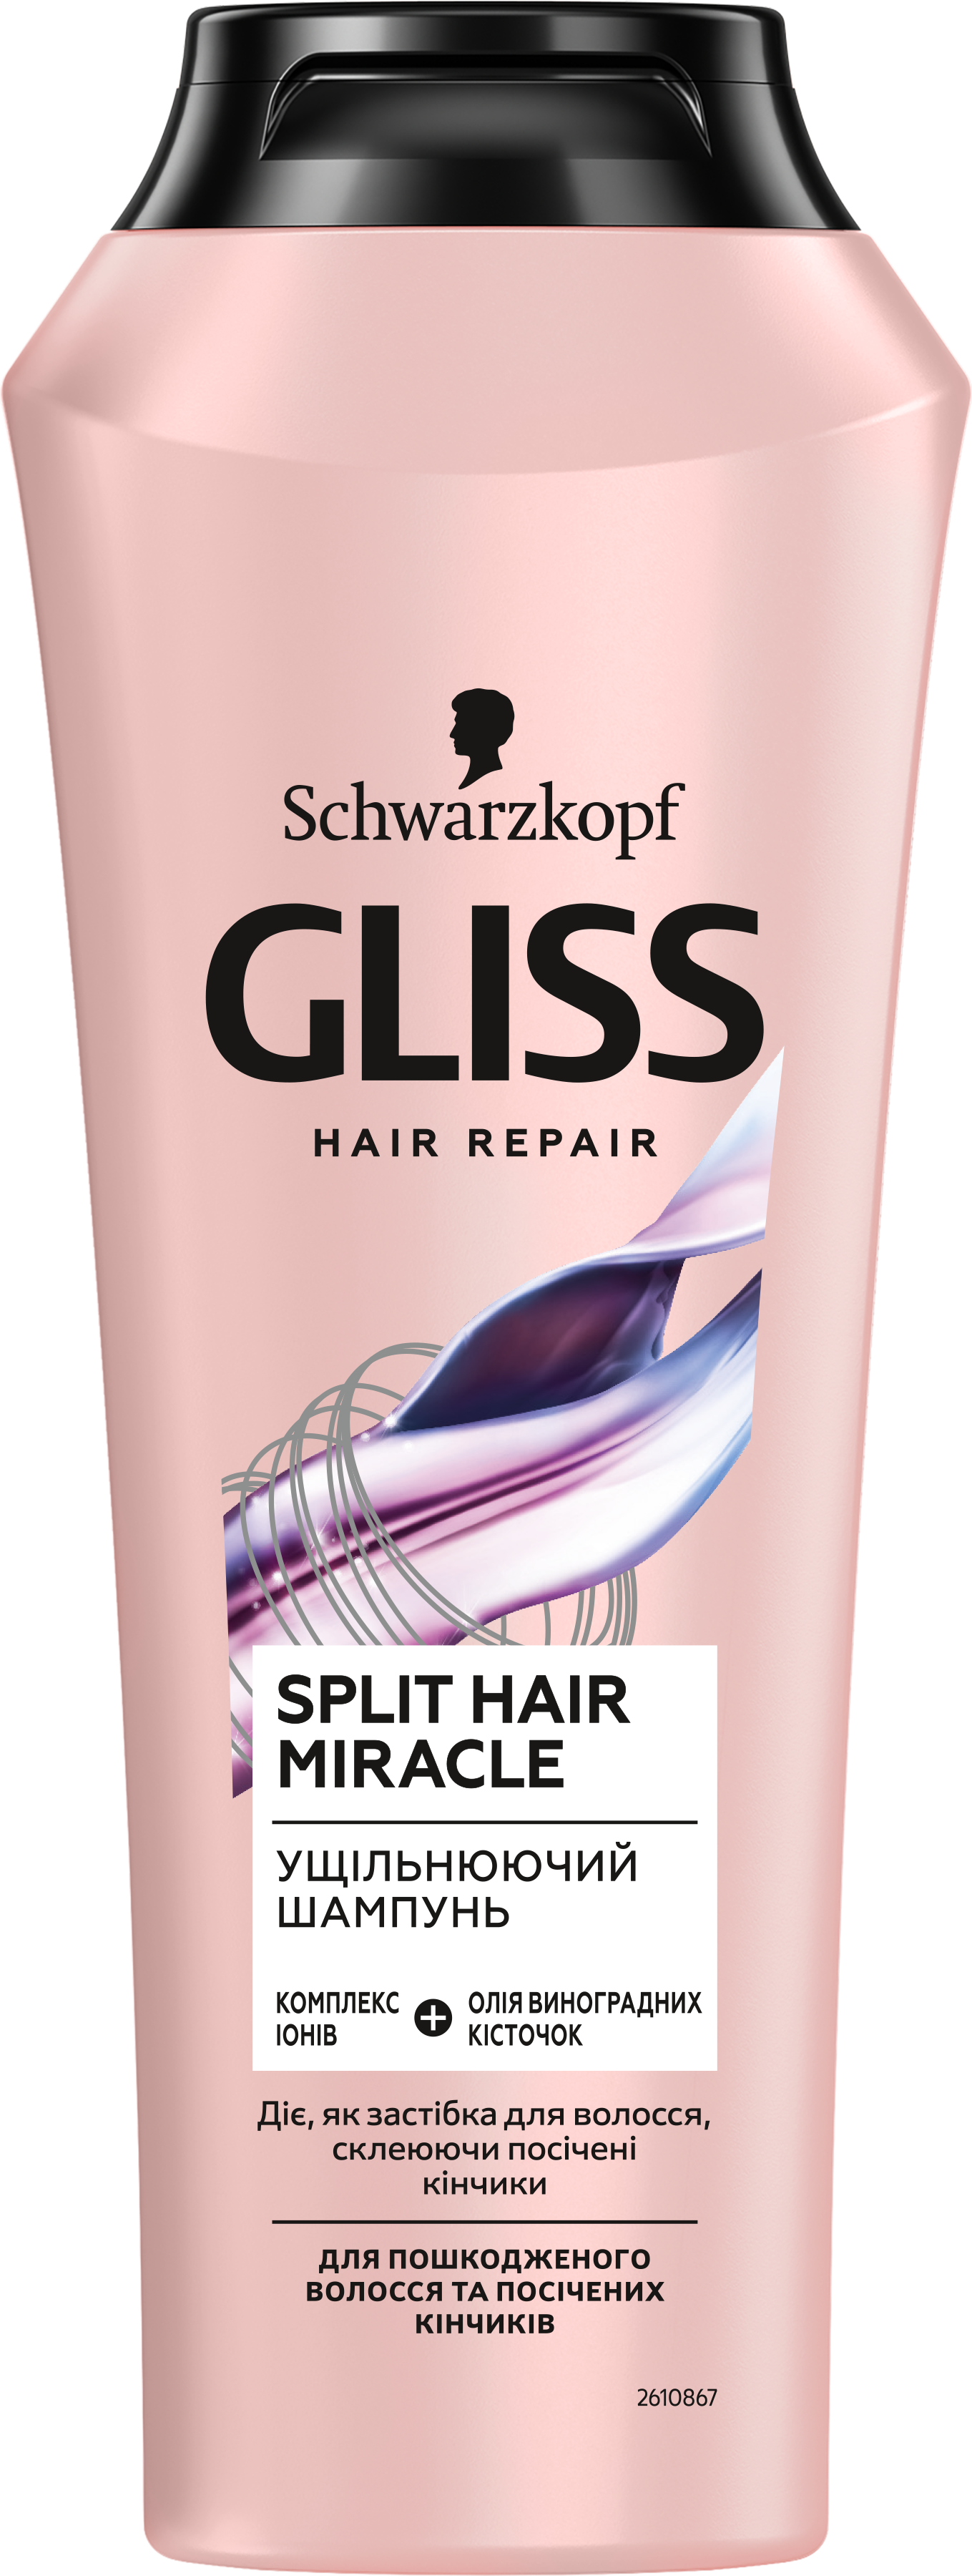 Подарунковий набір Gliss Split Hair Miracle: Шампунь, 250 мл + Бальзам, 200 мл - фото 6